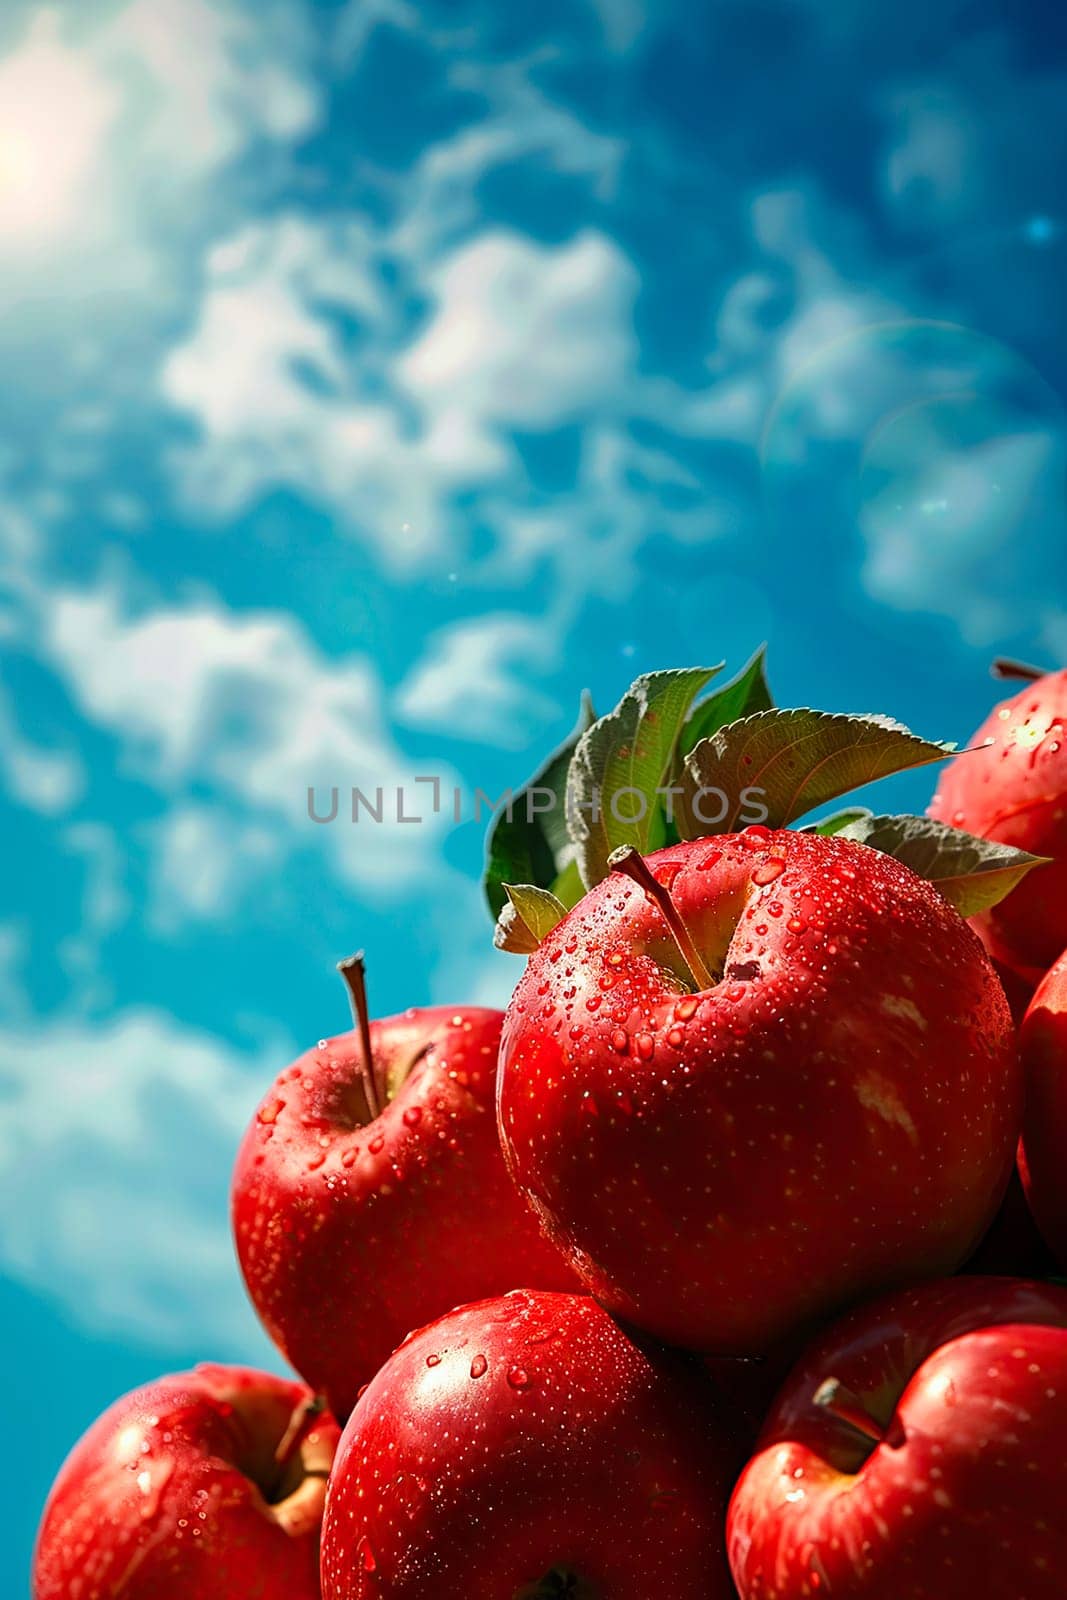 Apple harvest in the garden. selective focus. by yanadjana